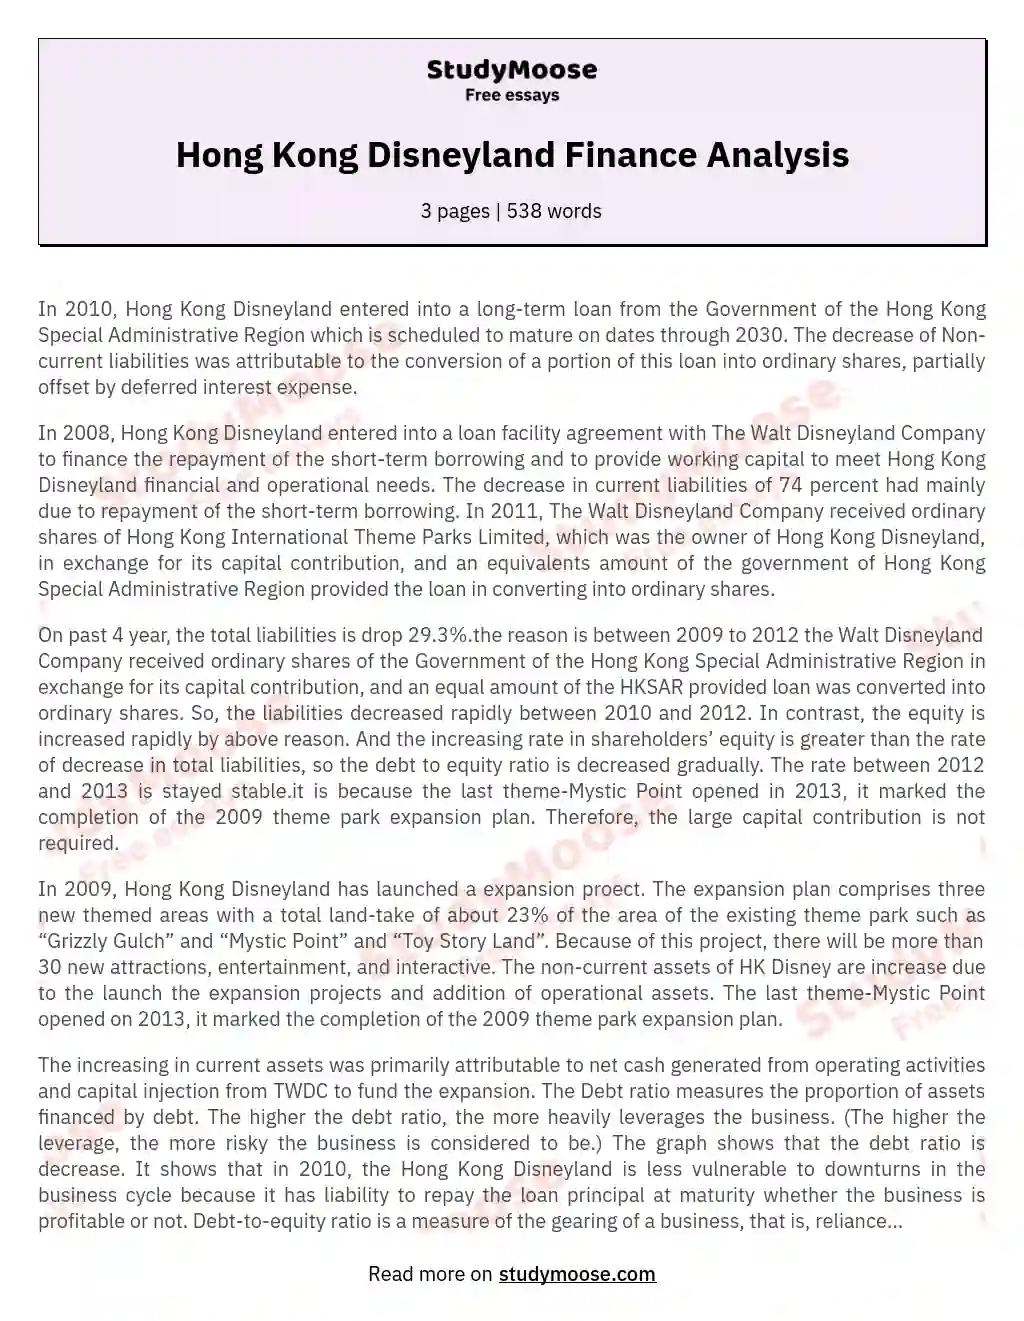 Hong Kong Disneyland Finance Analysis essay